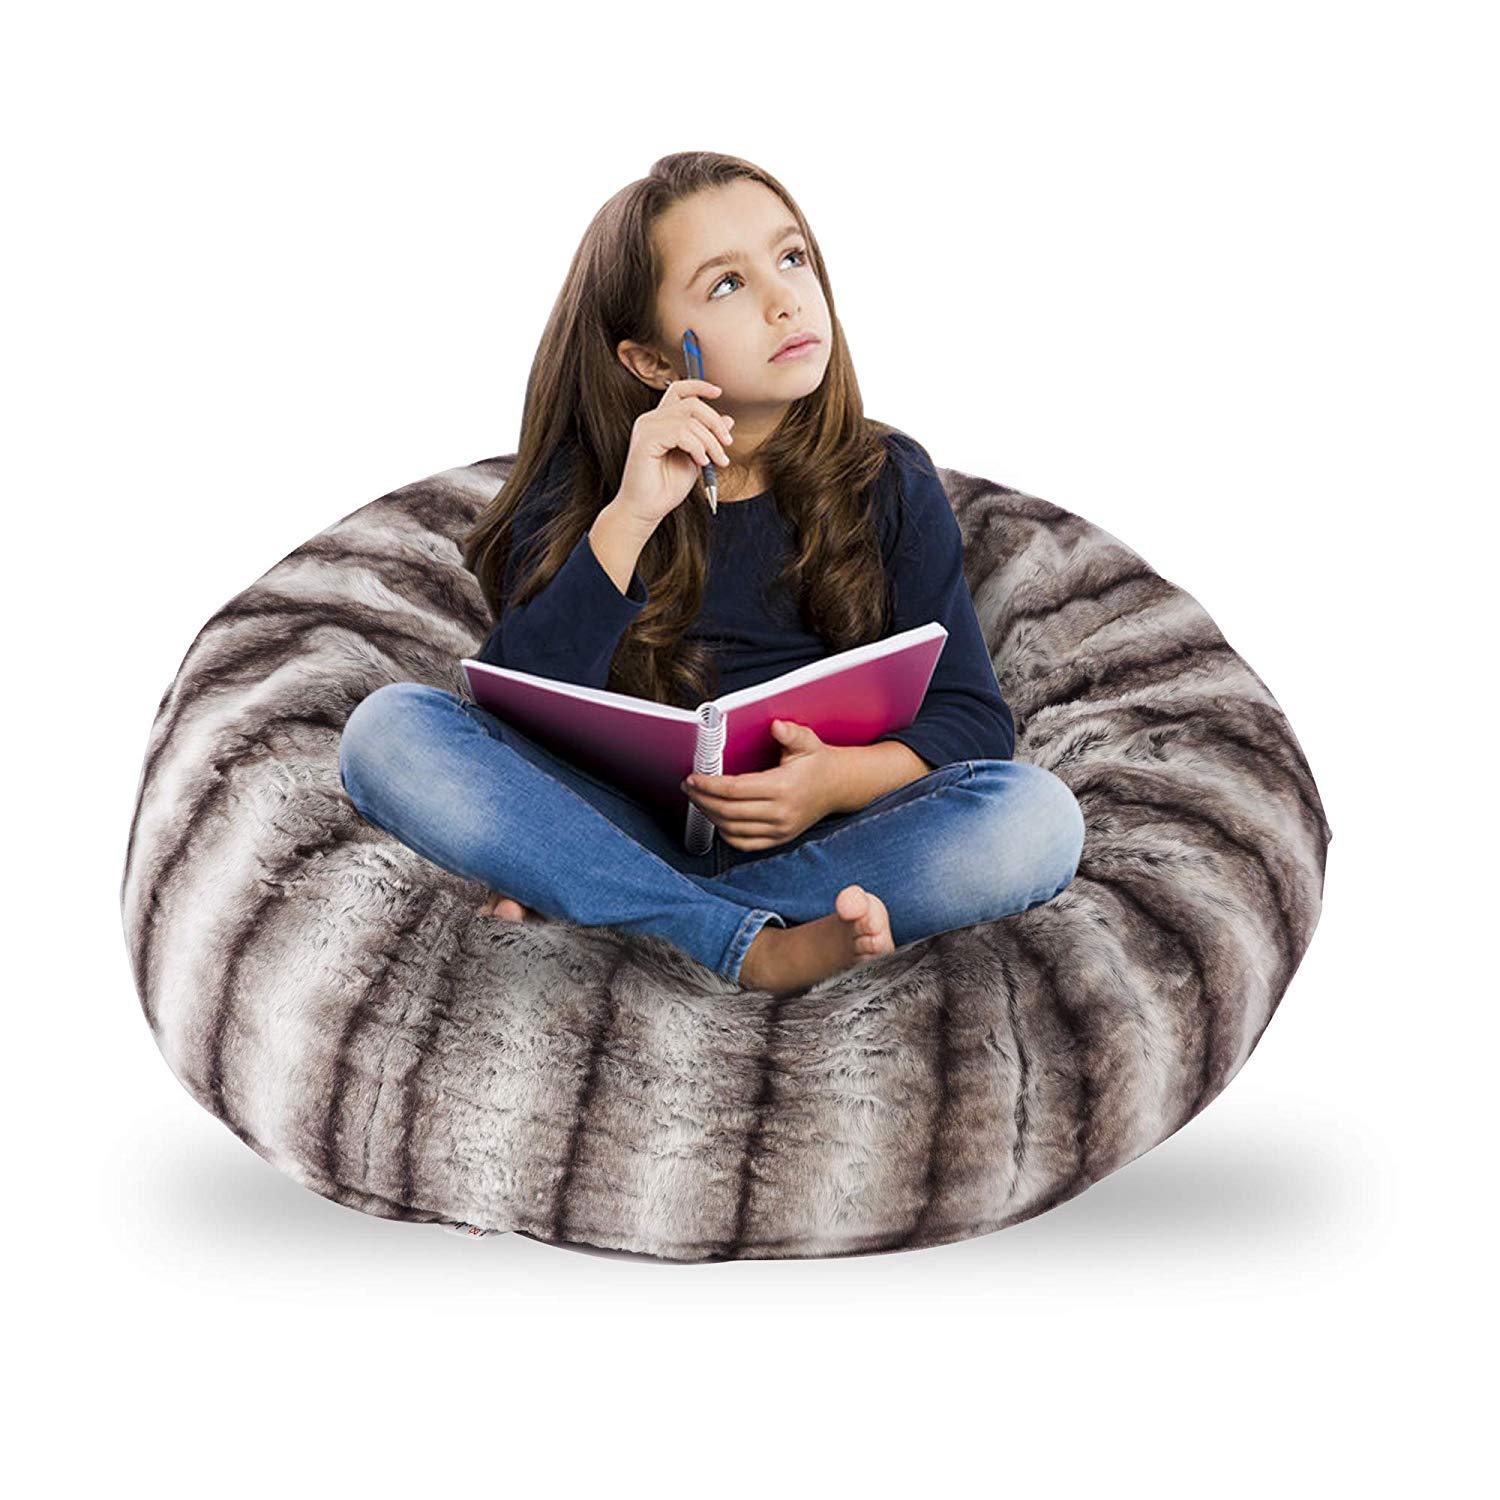 Bosonshop Comfy Bean Bag Chair Sofa Plush Furry Sponge Filling for Adults and Kids 3 Ft